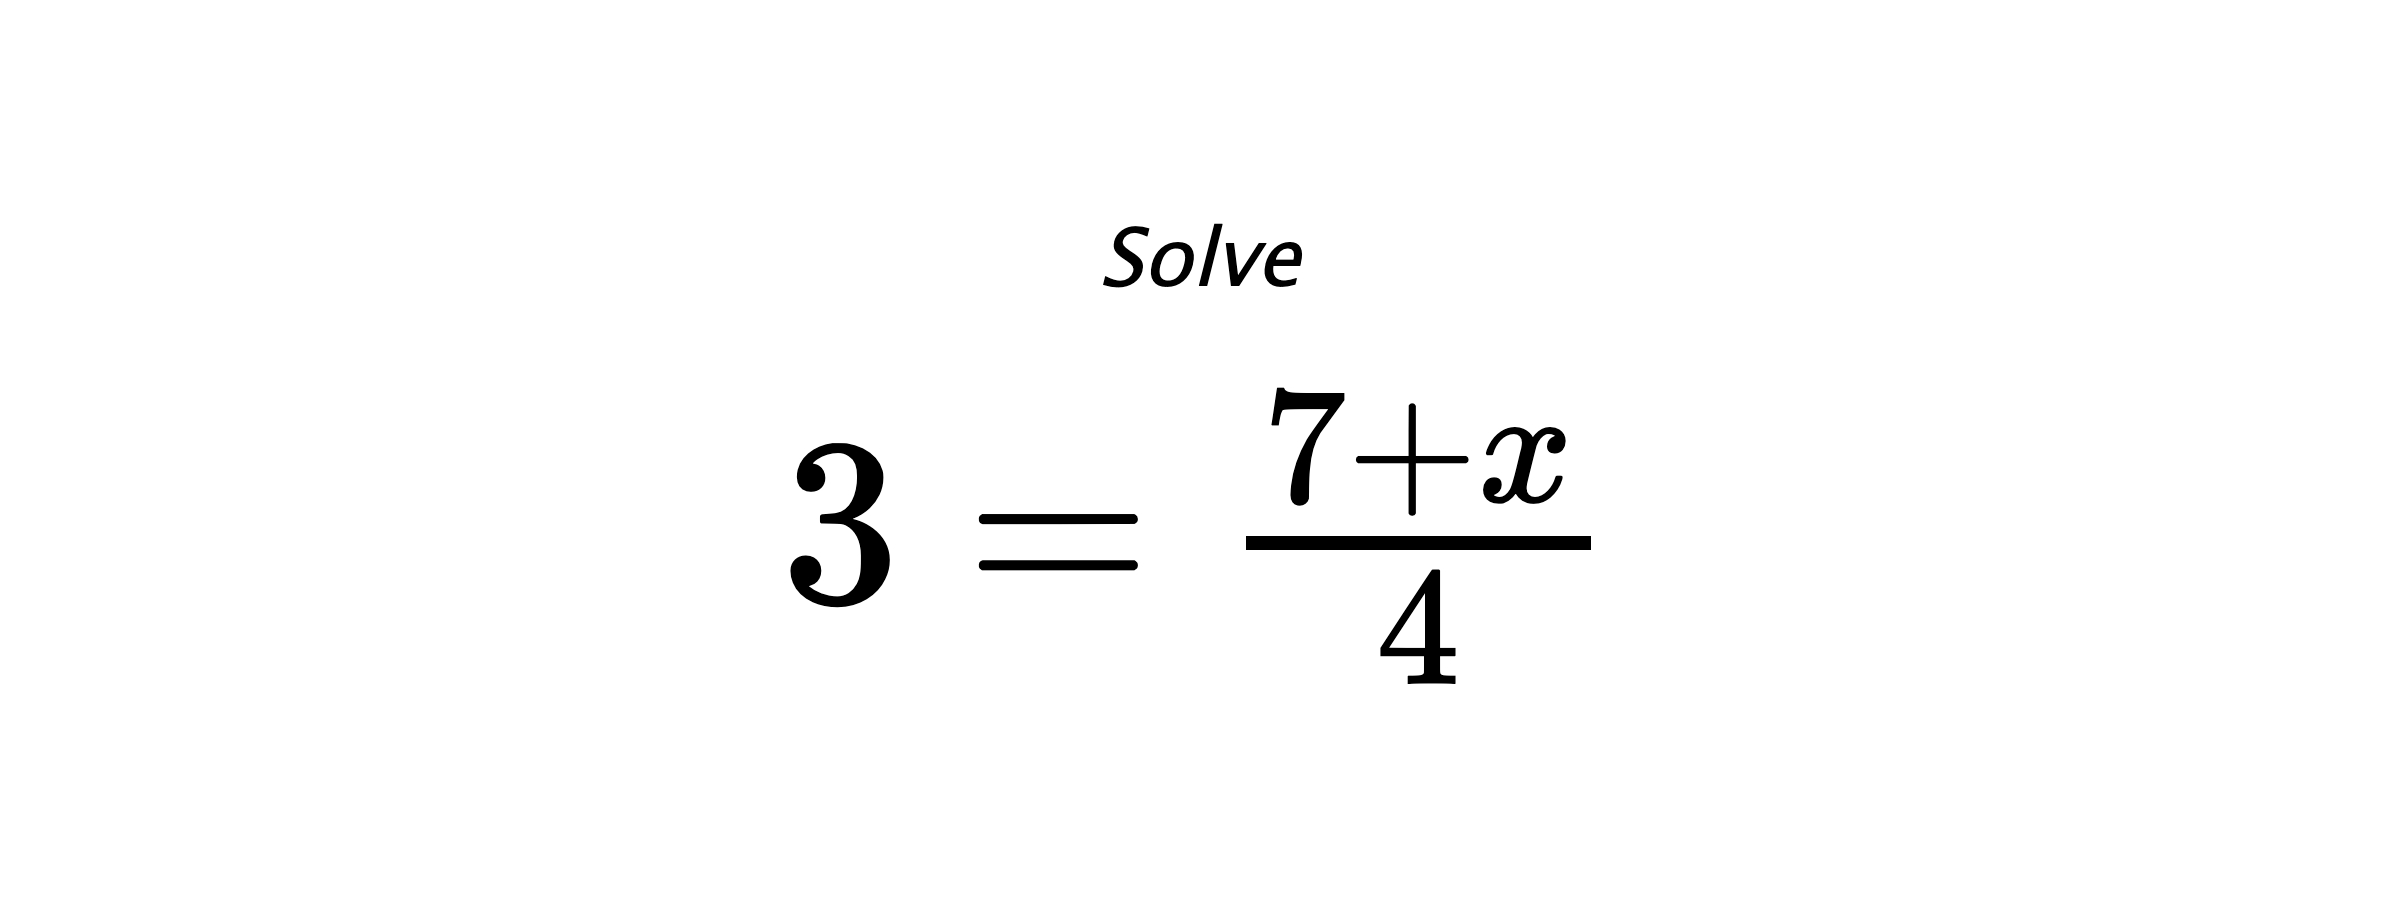 Solve $ 3=\frac{7+x}{4} $